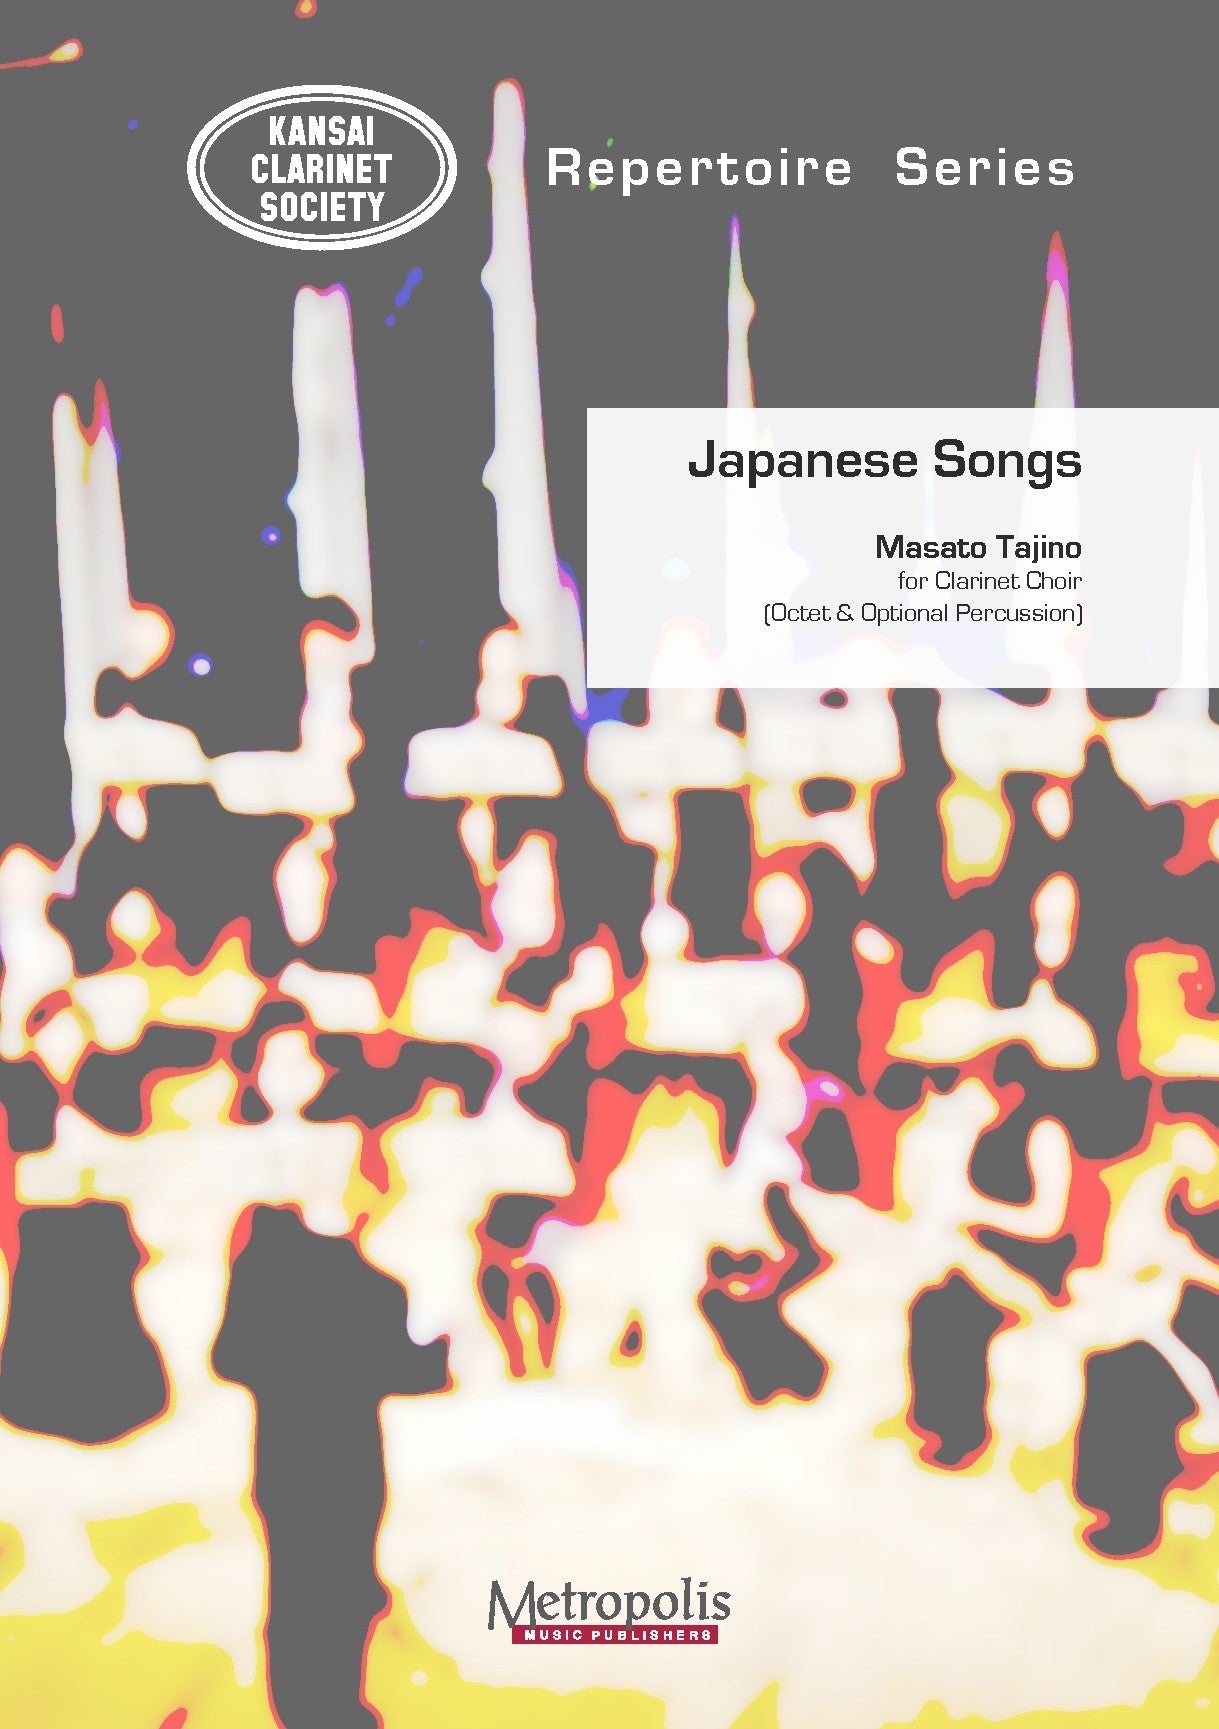 Hiketick - Japanese Songs for Clarinet Choir